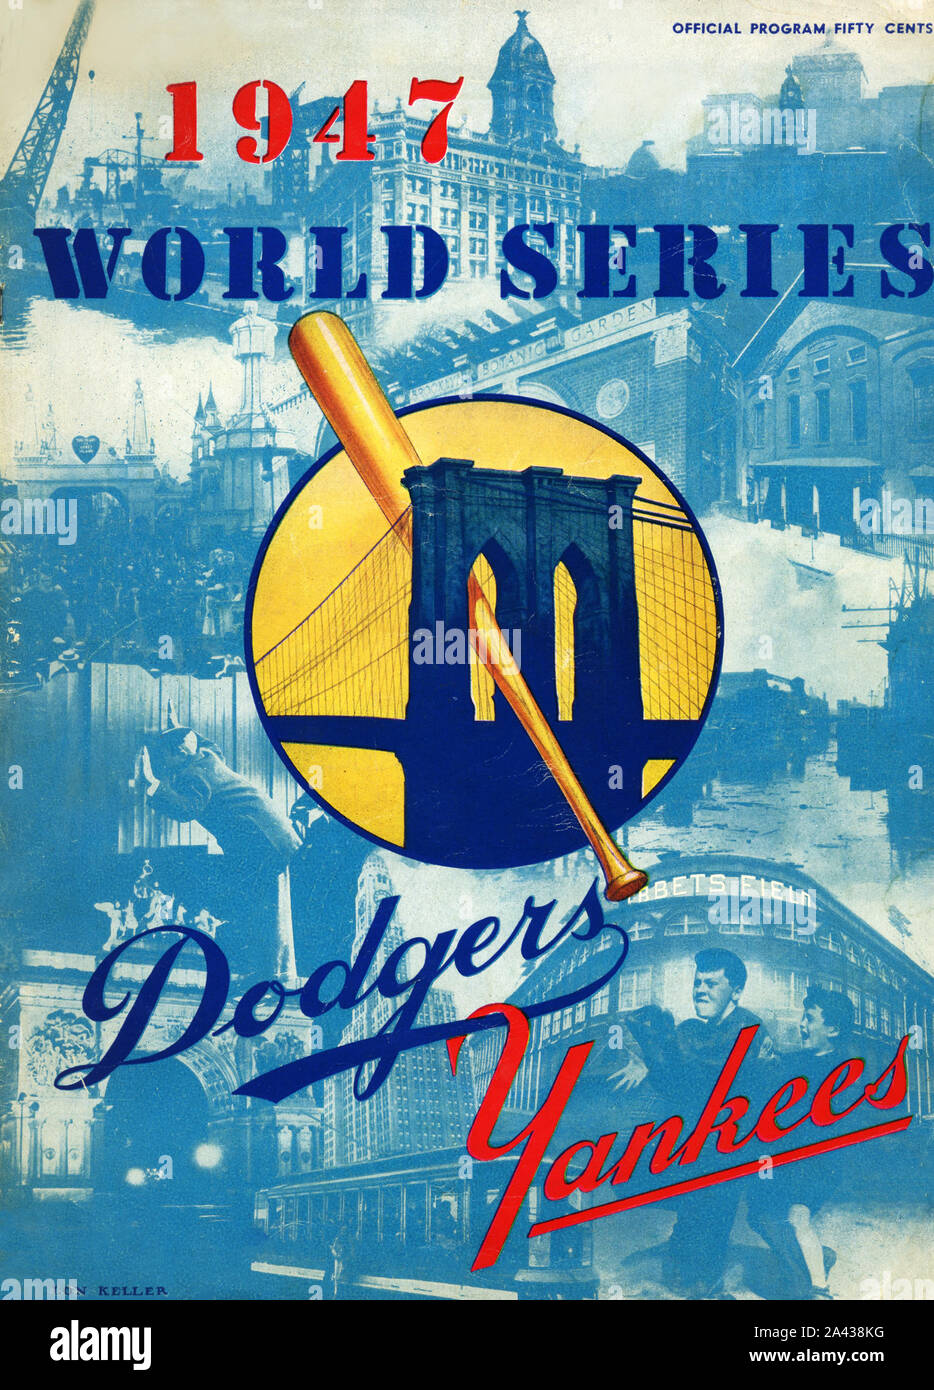 2000 World Series Program Cover 18 x 14 Framed Print - Subway Series